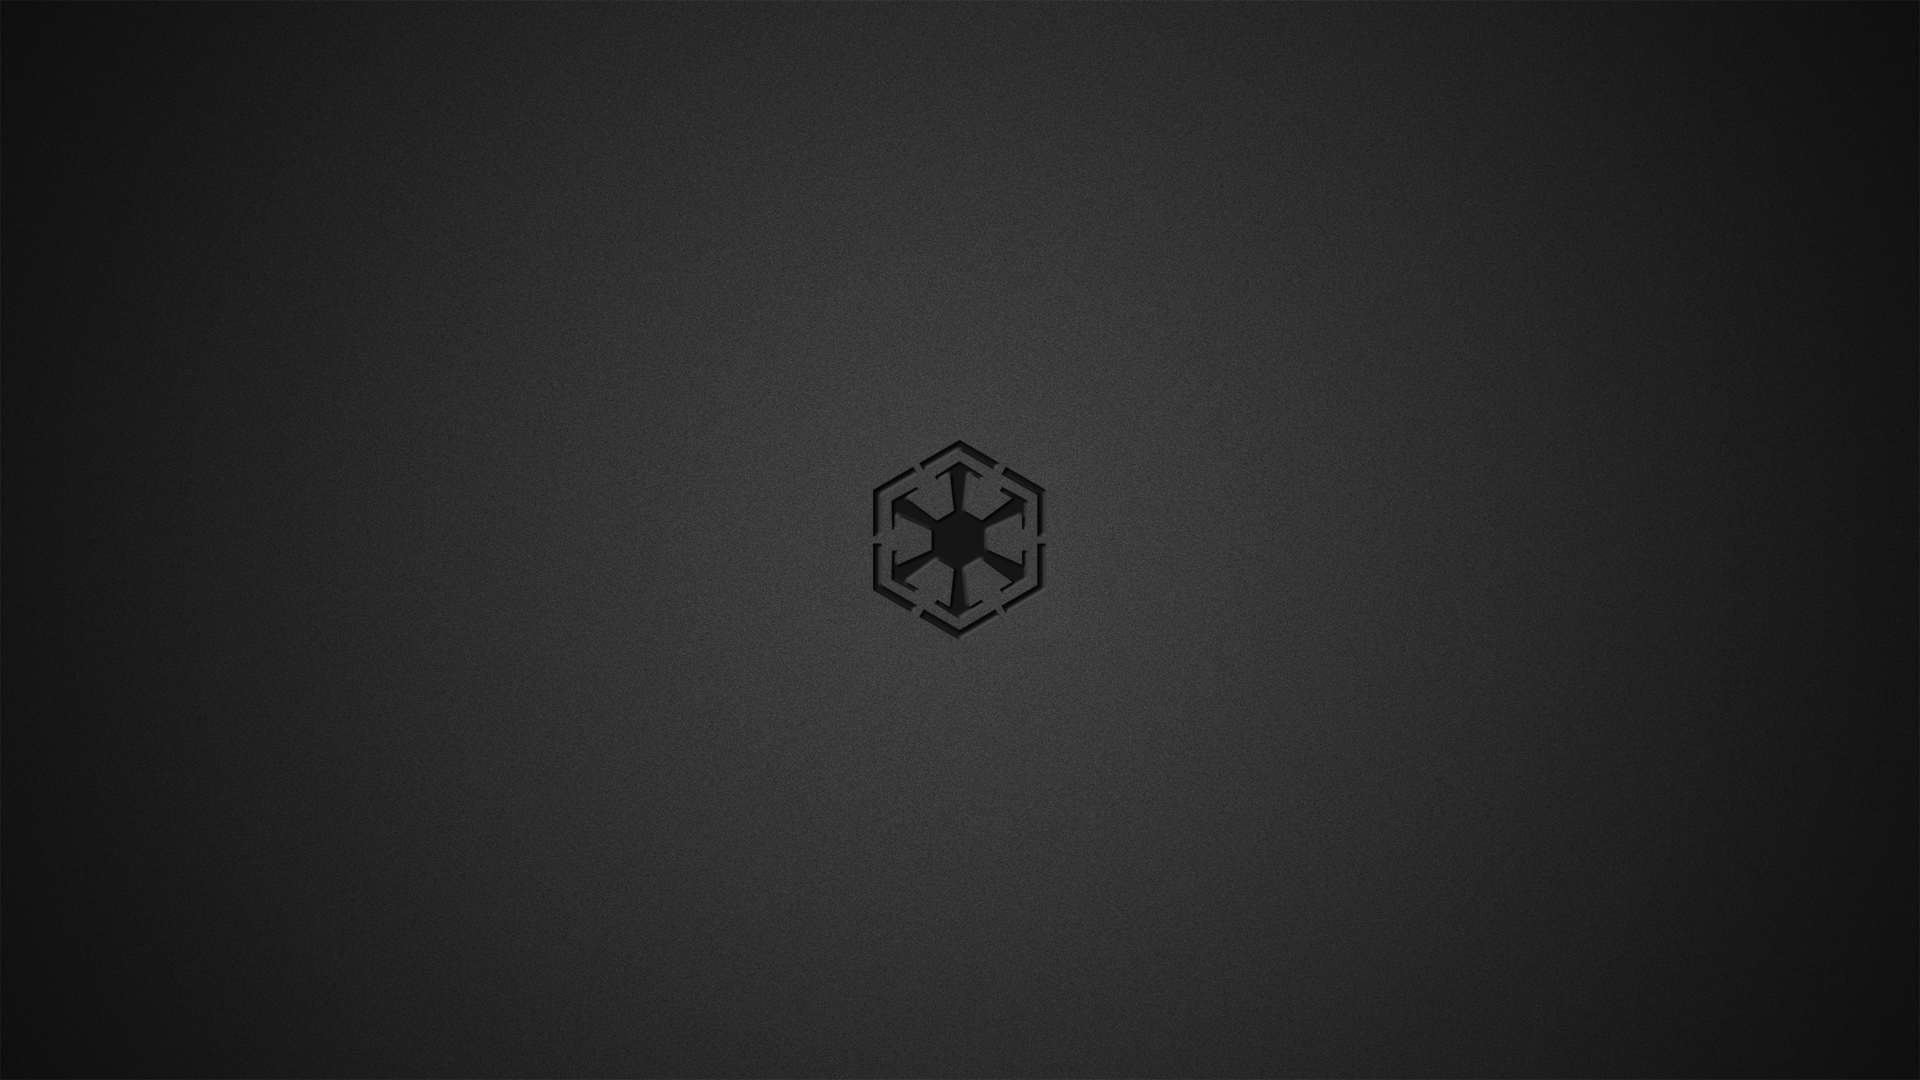 General 1920x1080 Star Wars minimalism monochrome simple background science fiction